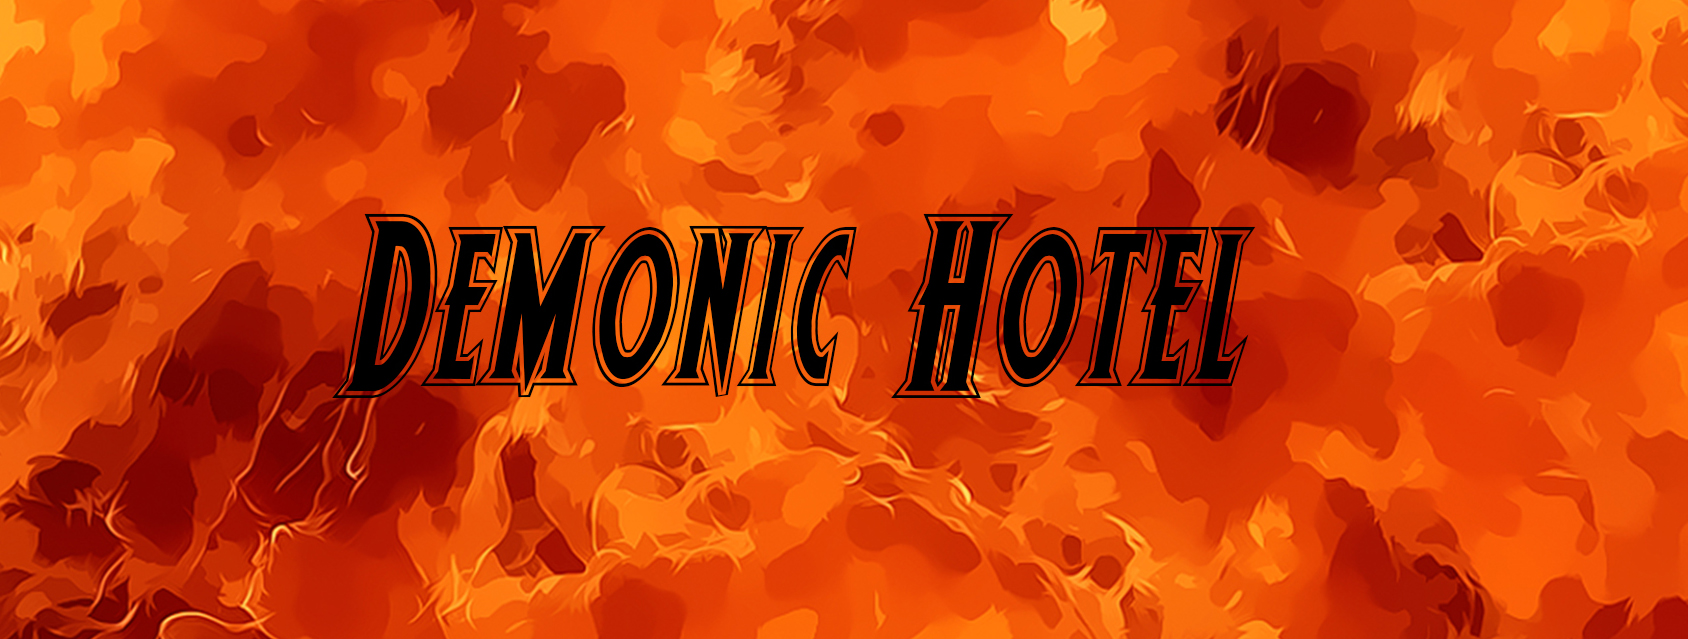 Demonic Hotel